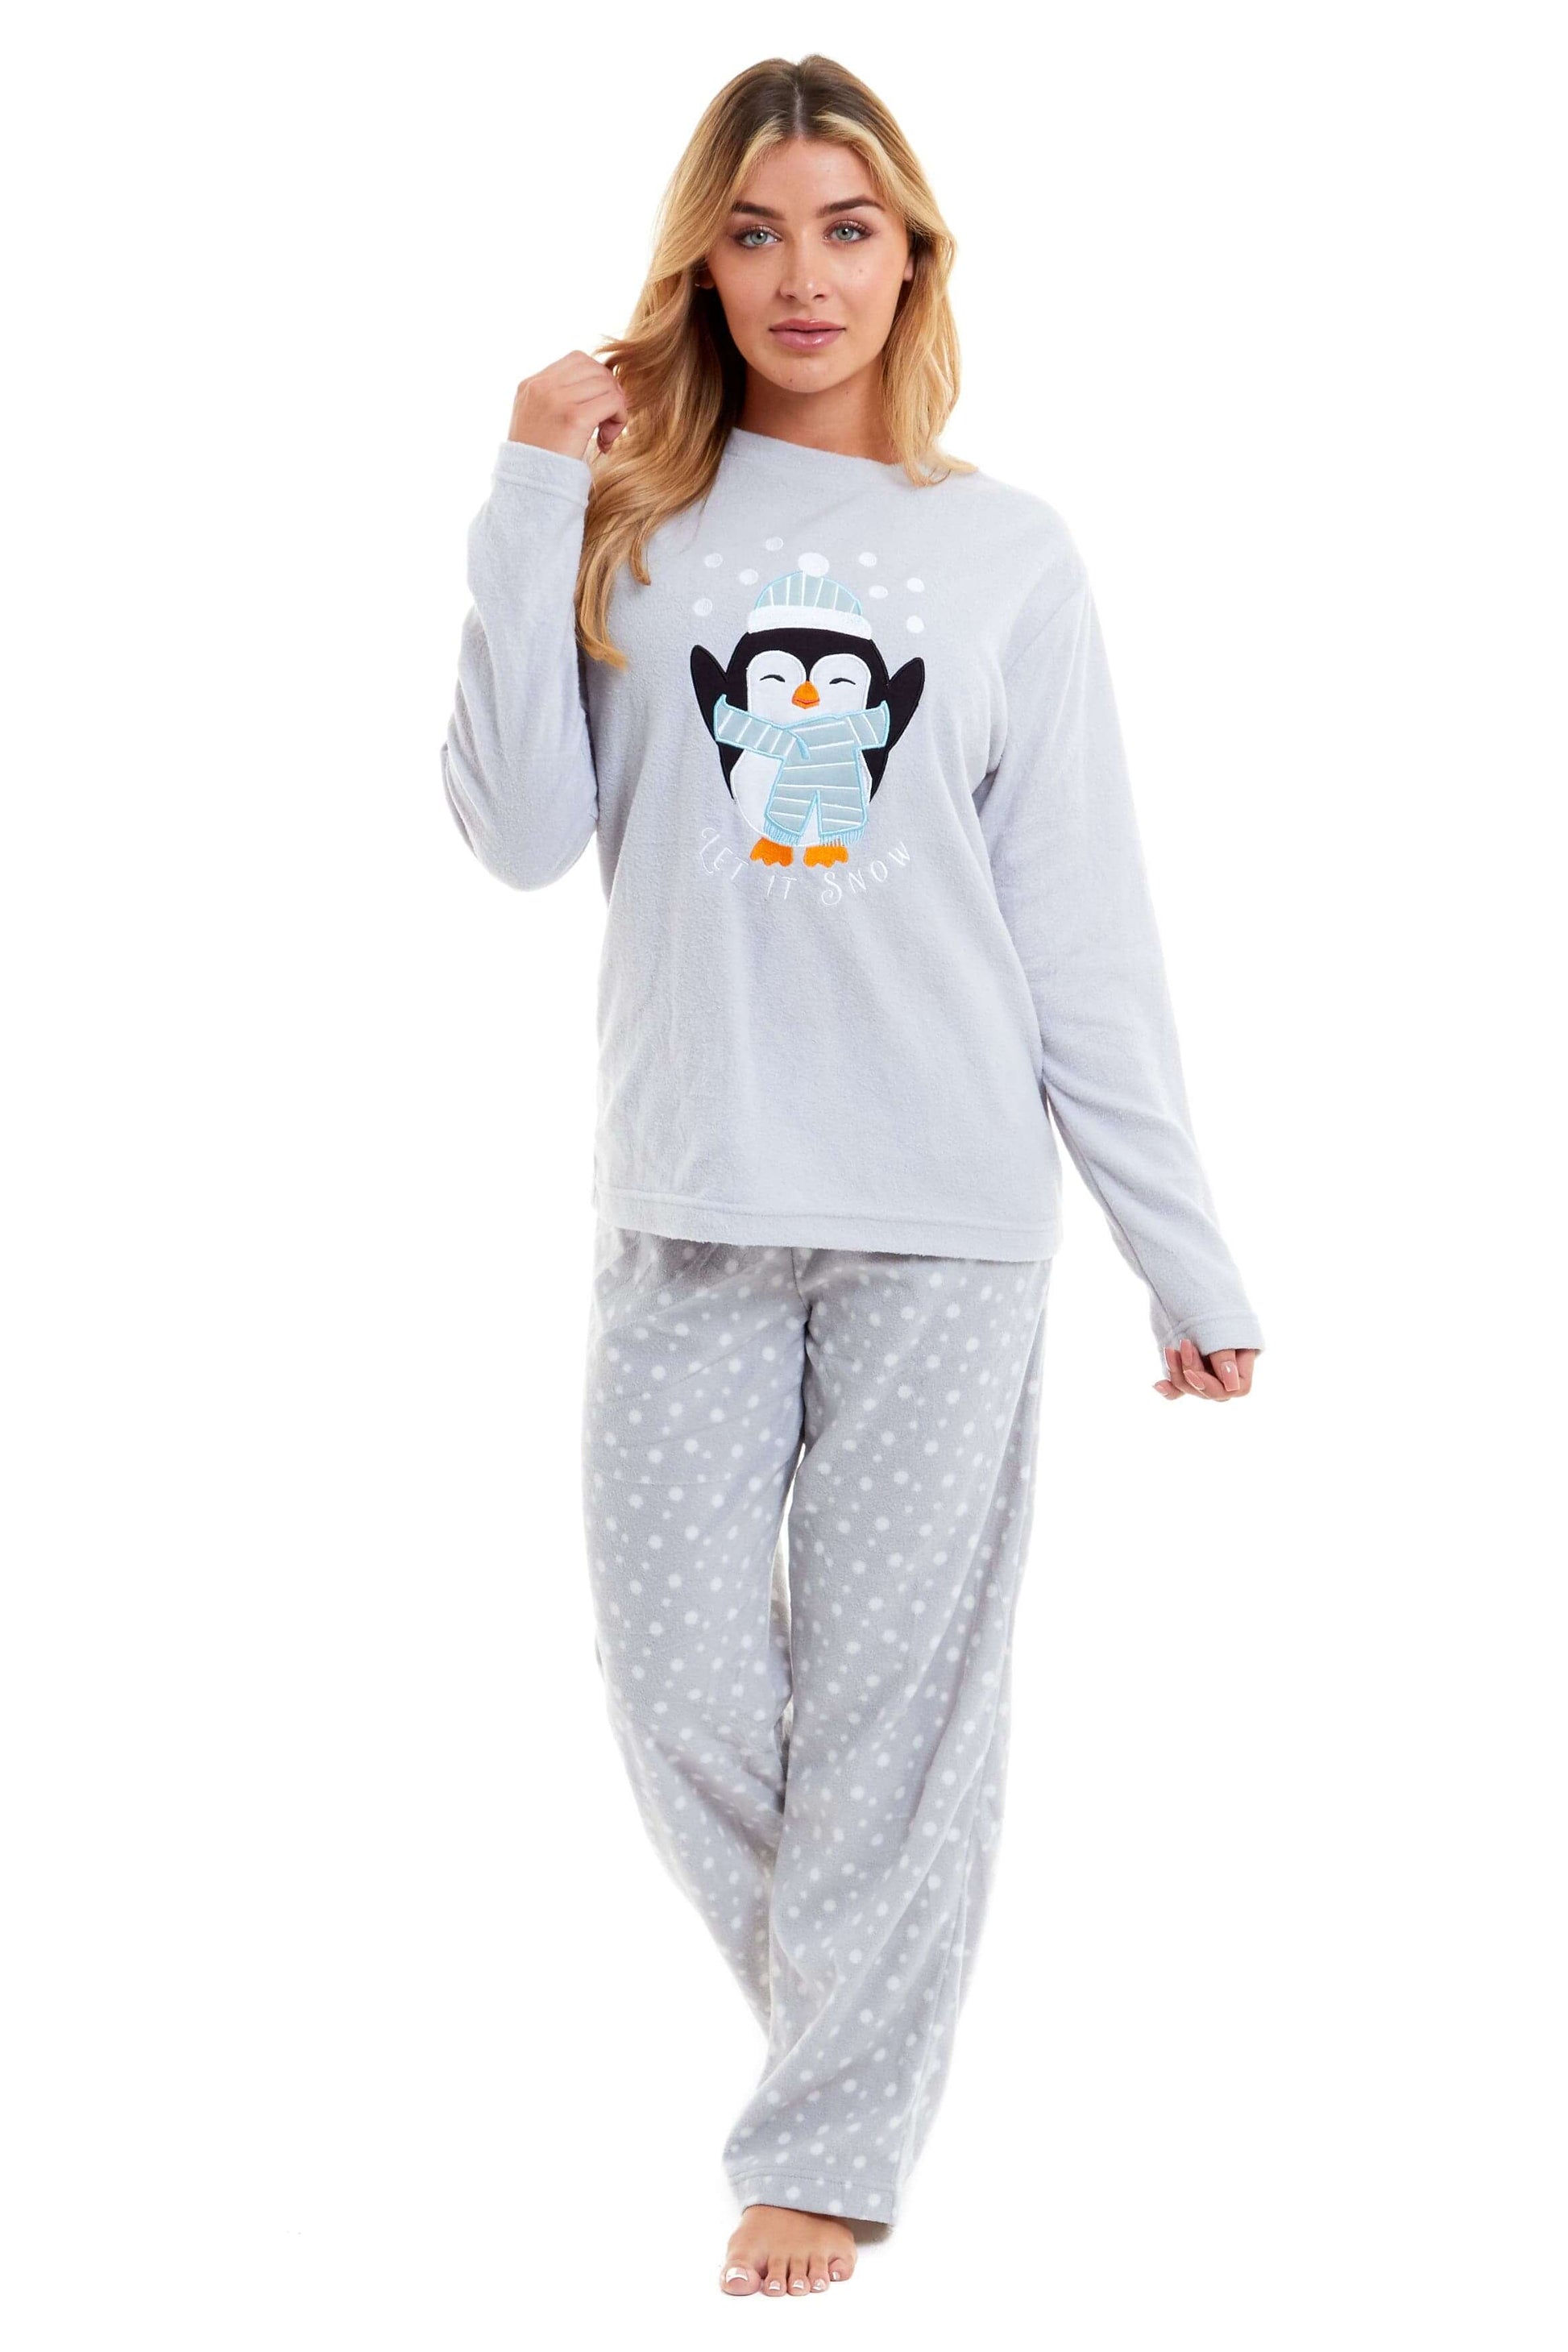 Penguin Polar Fleece Pyjama Set, Cosy Everyday Loungewear, Christmas Gift Idea. Buy now for £17.00. A Pyjamas by Daisy Dreamer. 12-14, 16-18, 18-20, 8-10, animal, christmas, daisy dreamer, festive, fleece, gift, grey, ladies, long sleeve, loungewear, nigh